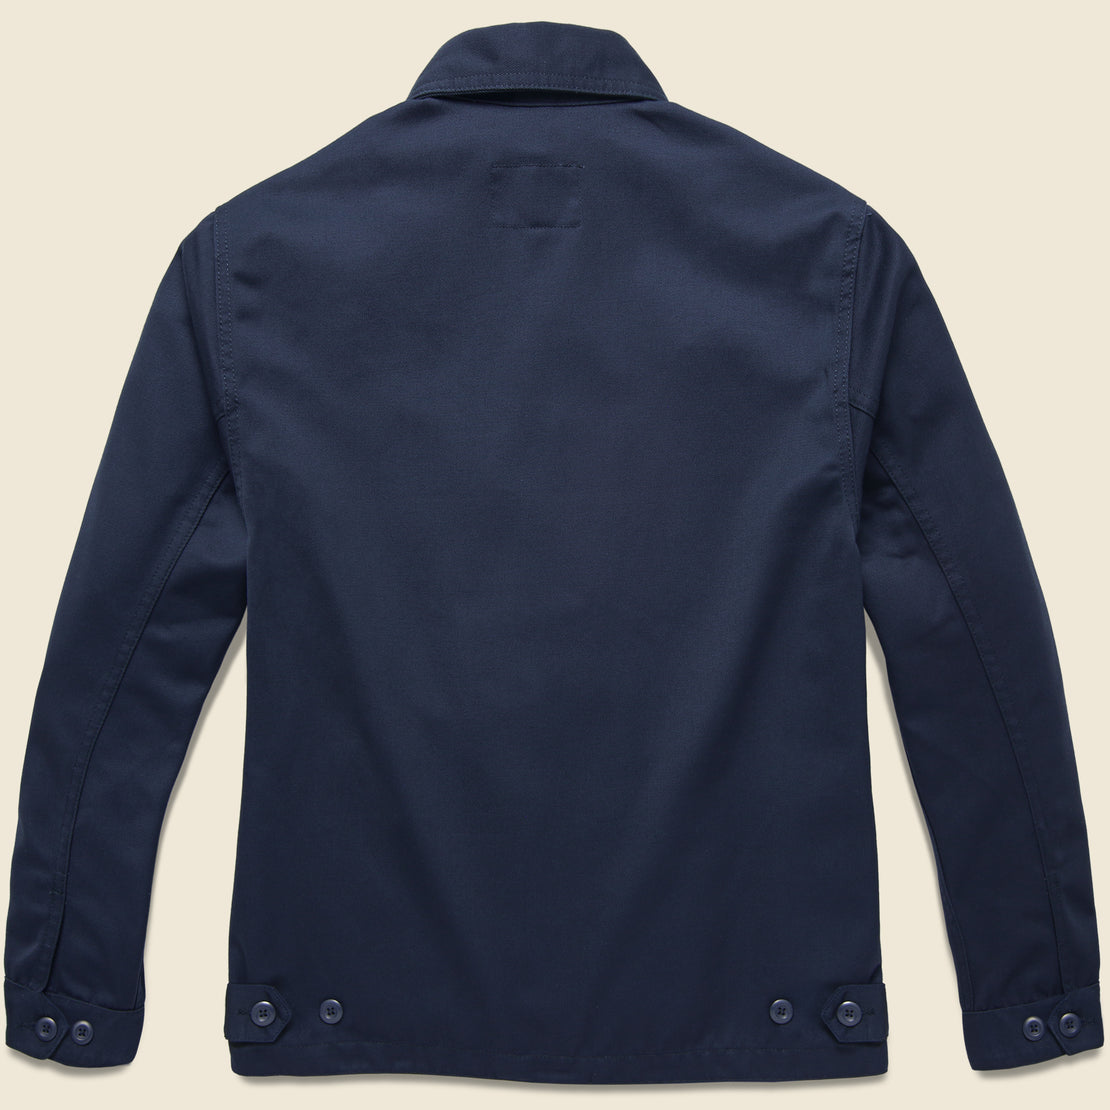 Modular Jacket - Mizar - Carhartt WIP - STAG Provisions - Outerwear - Coat / Jacket